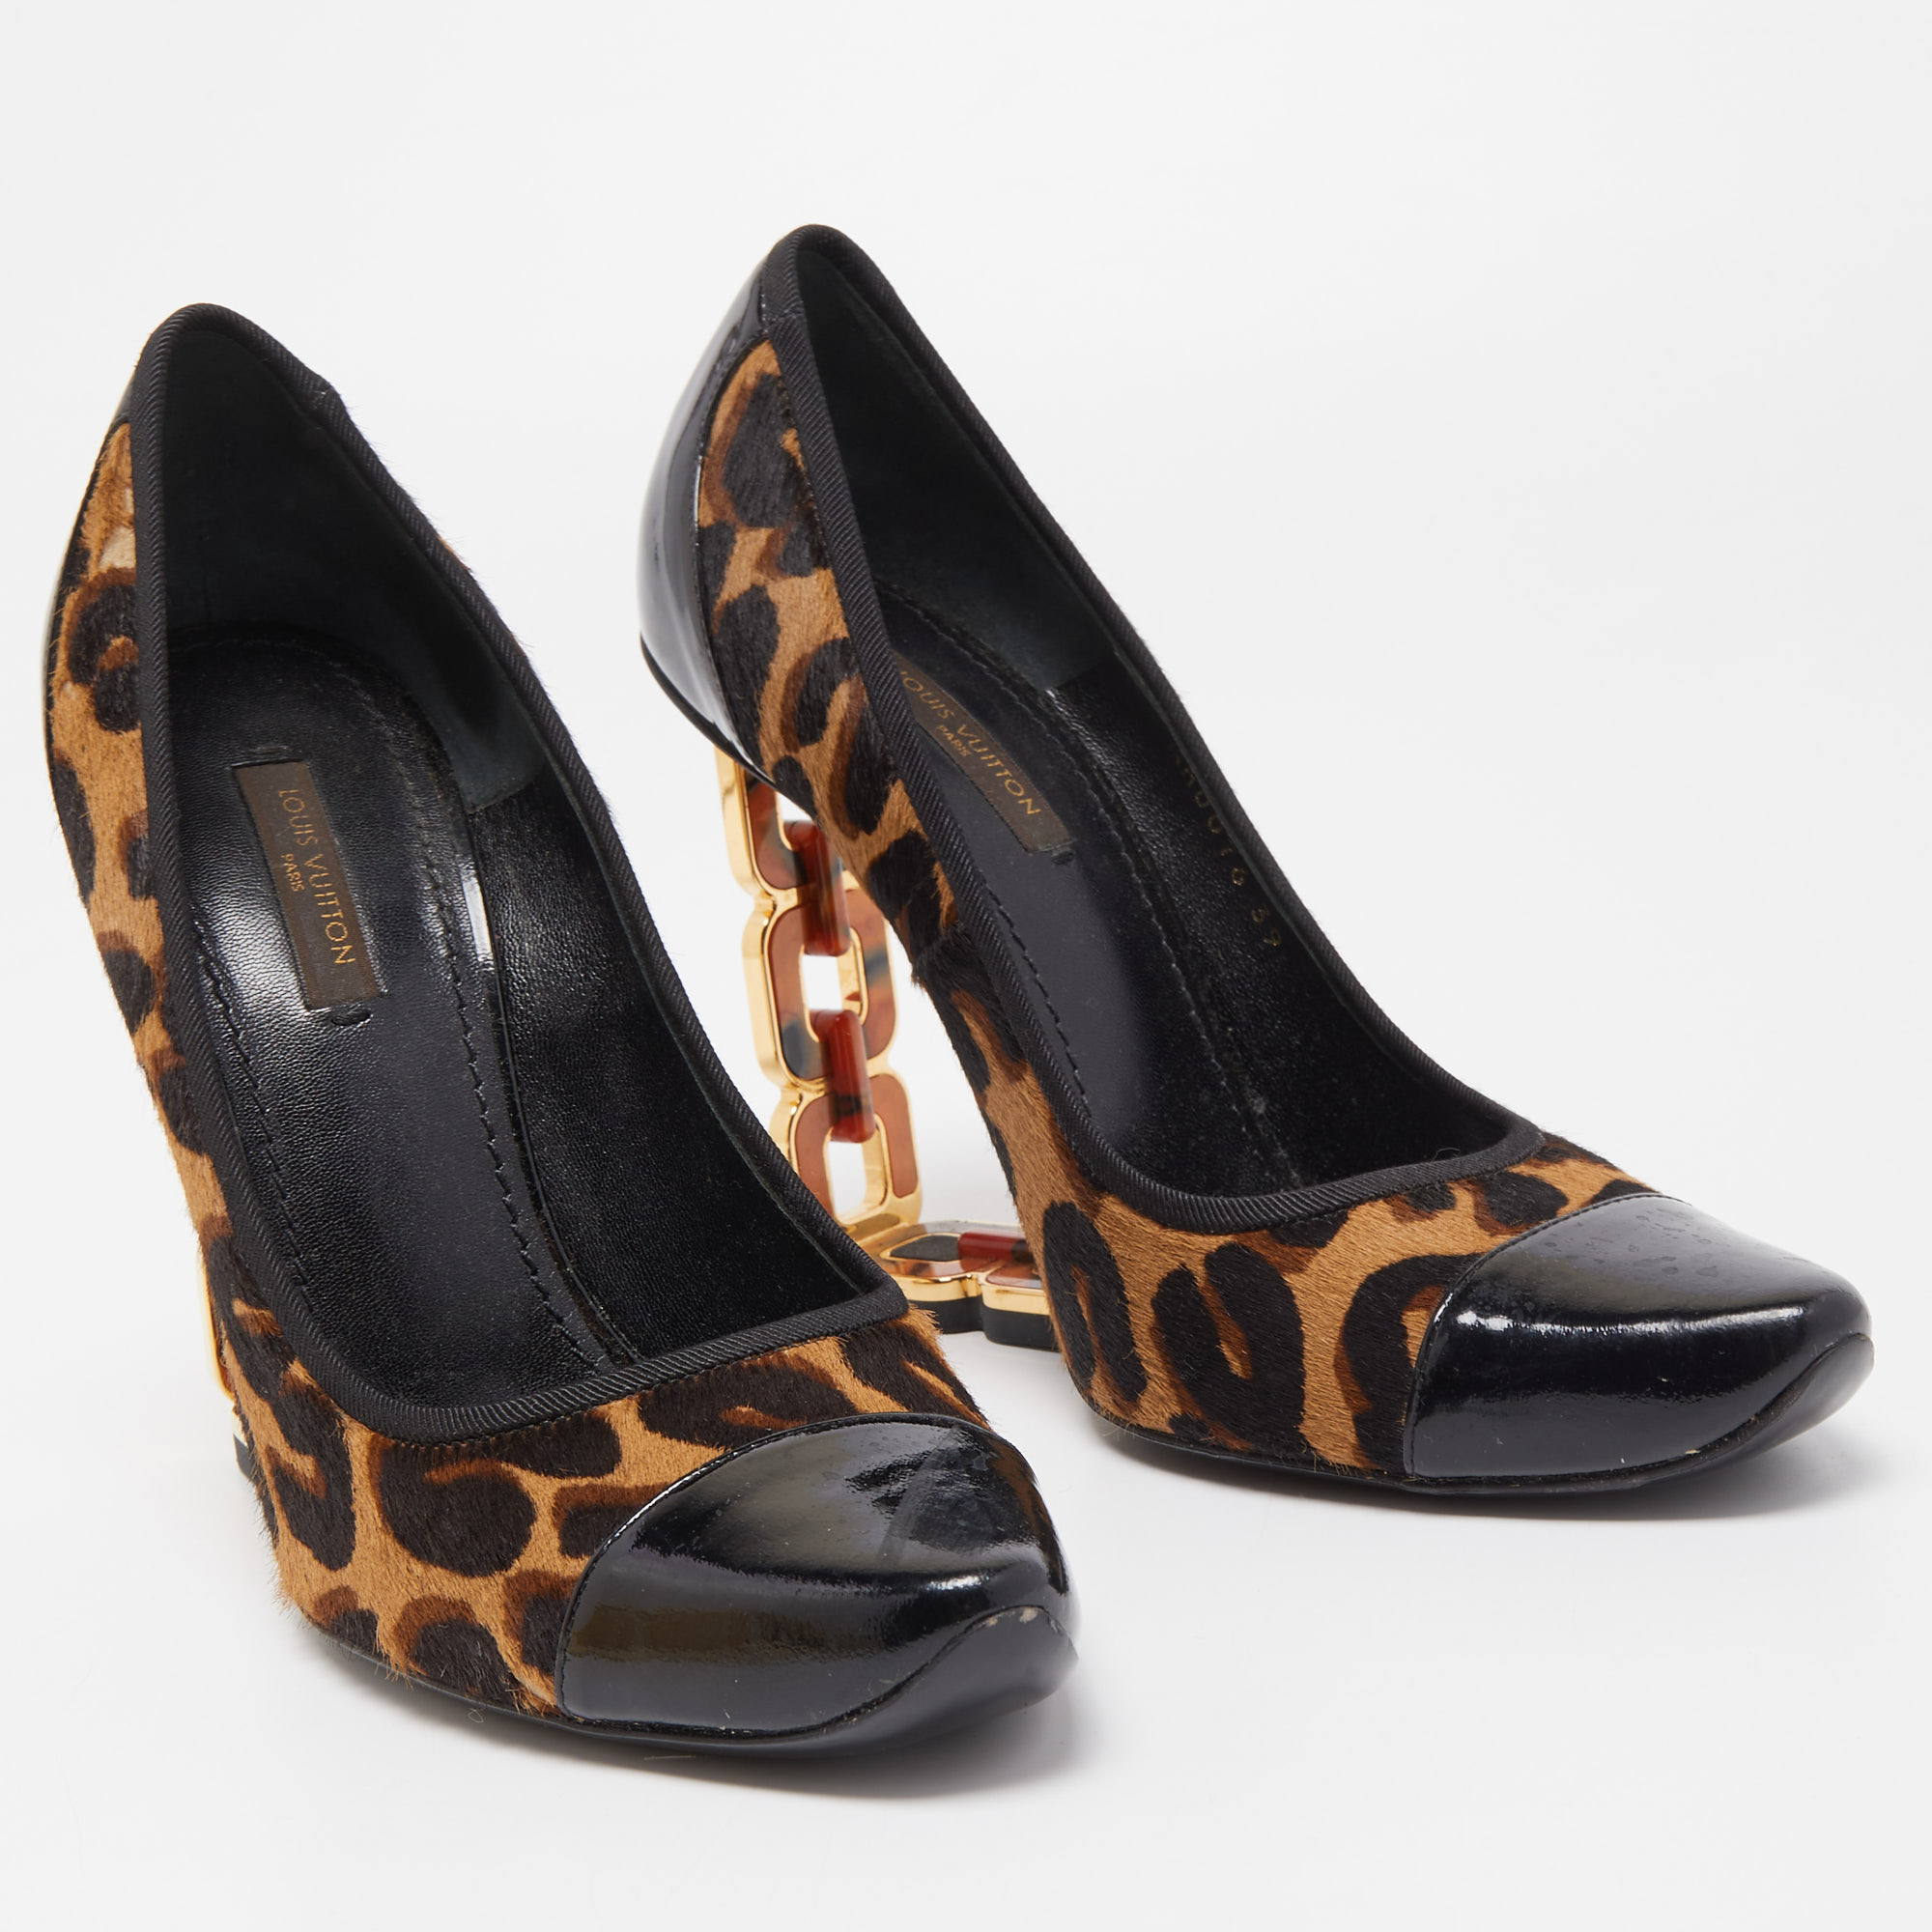 Louis Vuitton Tricolor Leopard Print Calf Hair And Patent Leather Wedge Pumps Size 39